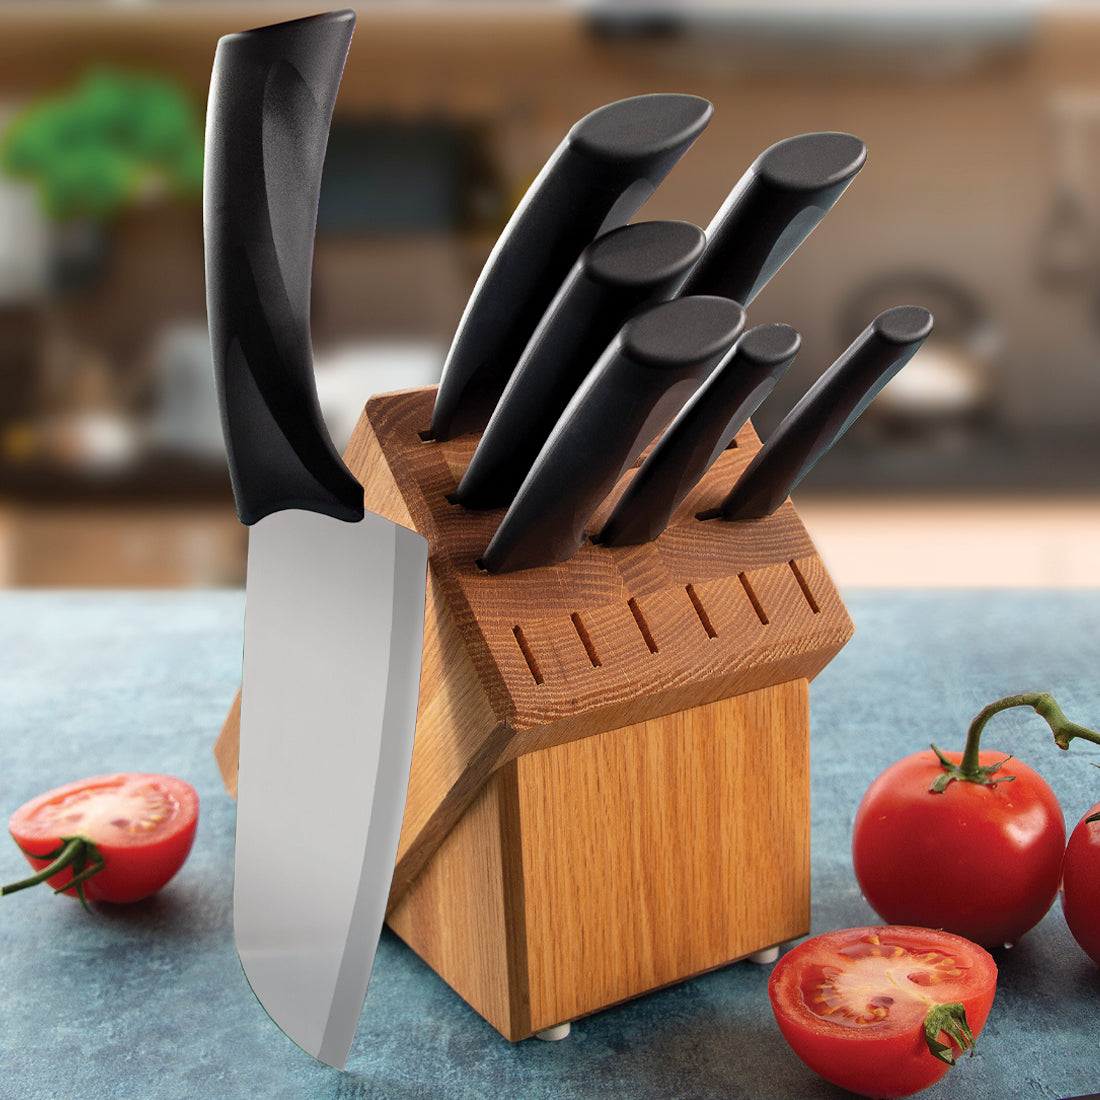 Rada Cutlery Anthem Oak Block Gift Set with black handles in wood block base. 